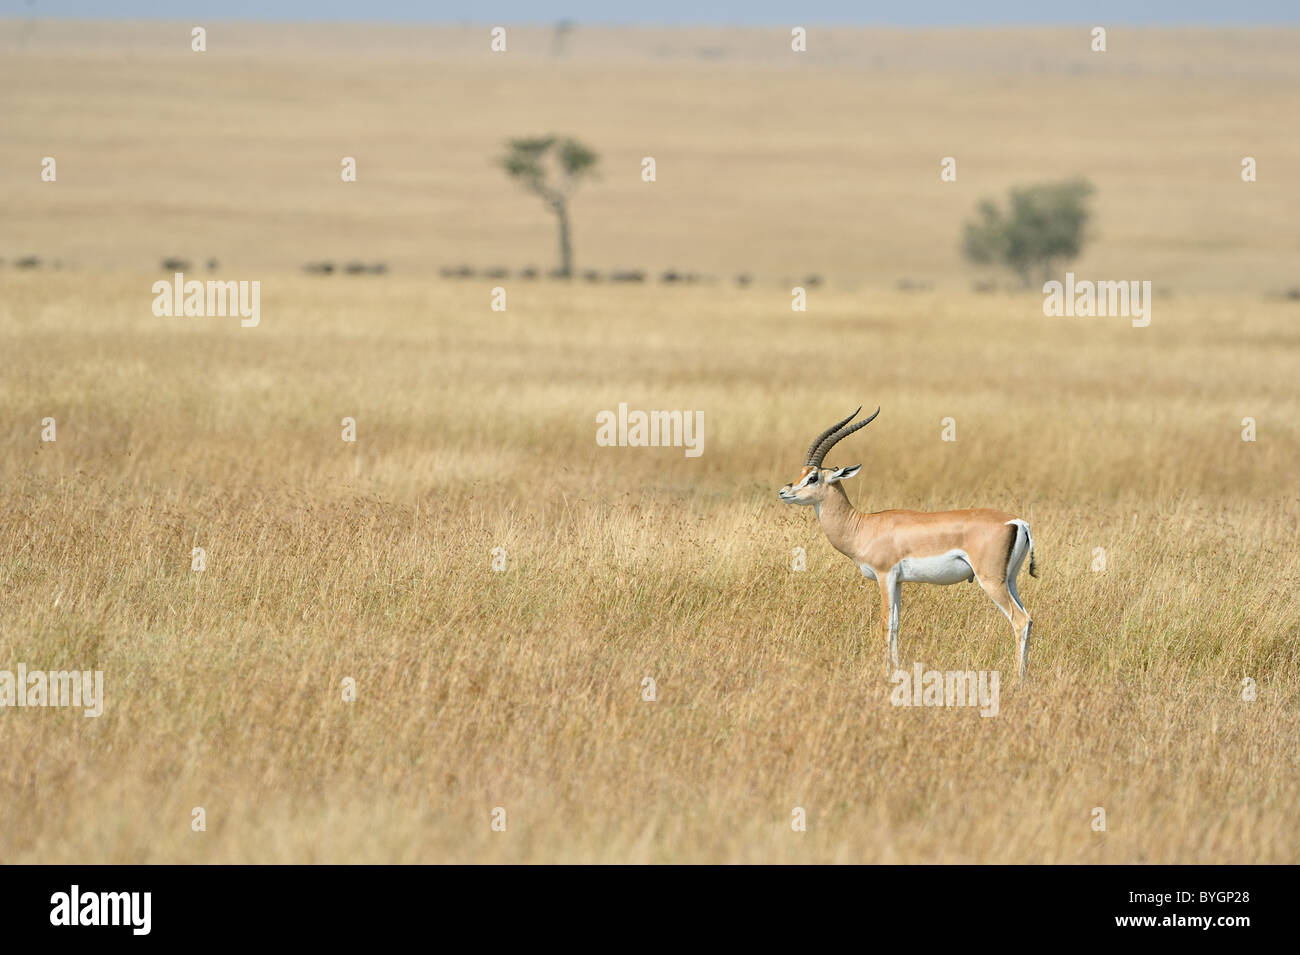 Grant's gazelle (Gazella granti - Nanger granti) standing in the savanna - Maasai Mara - Kenya - East Africa Stock Photo